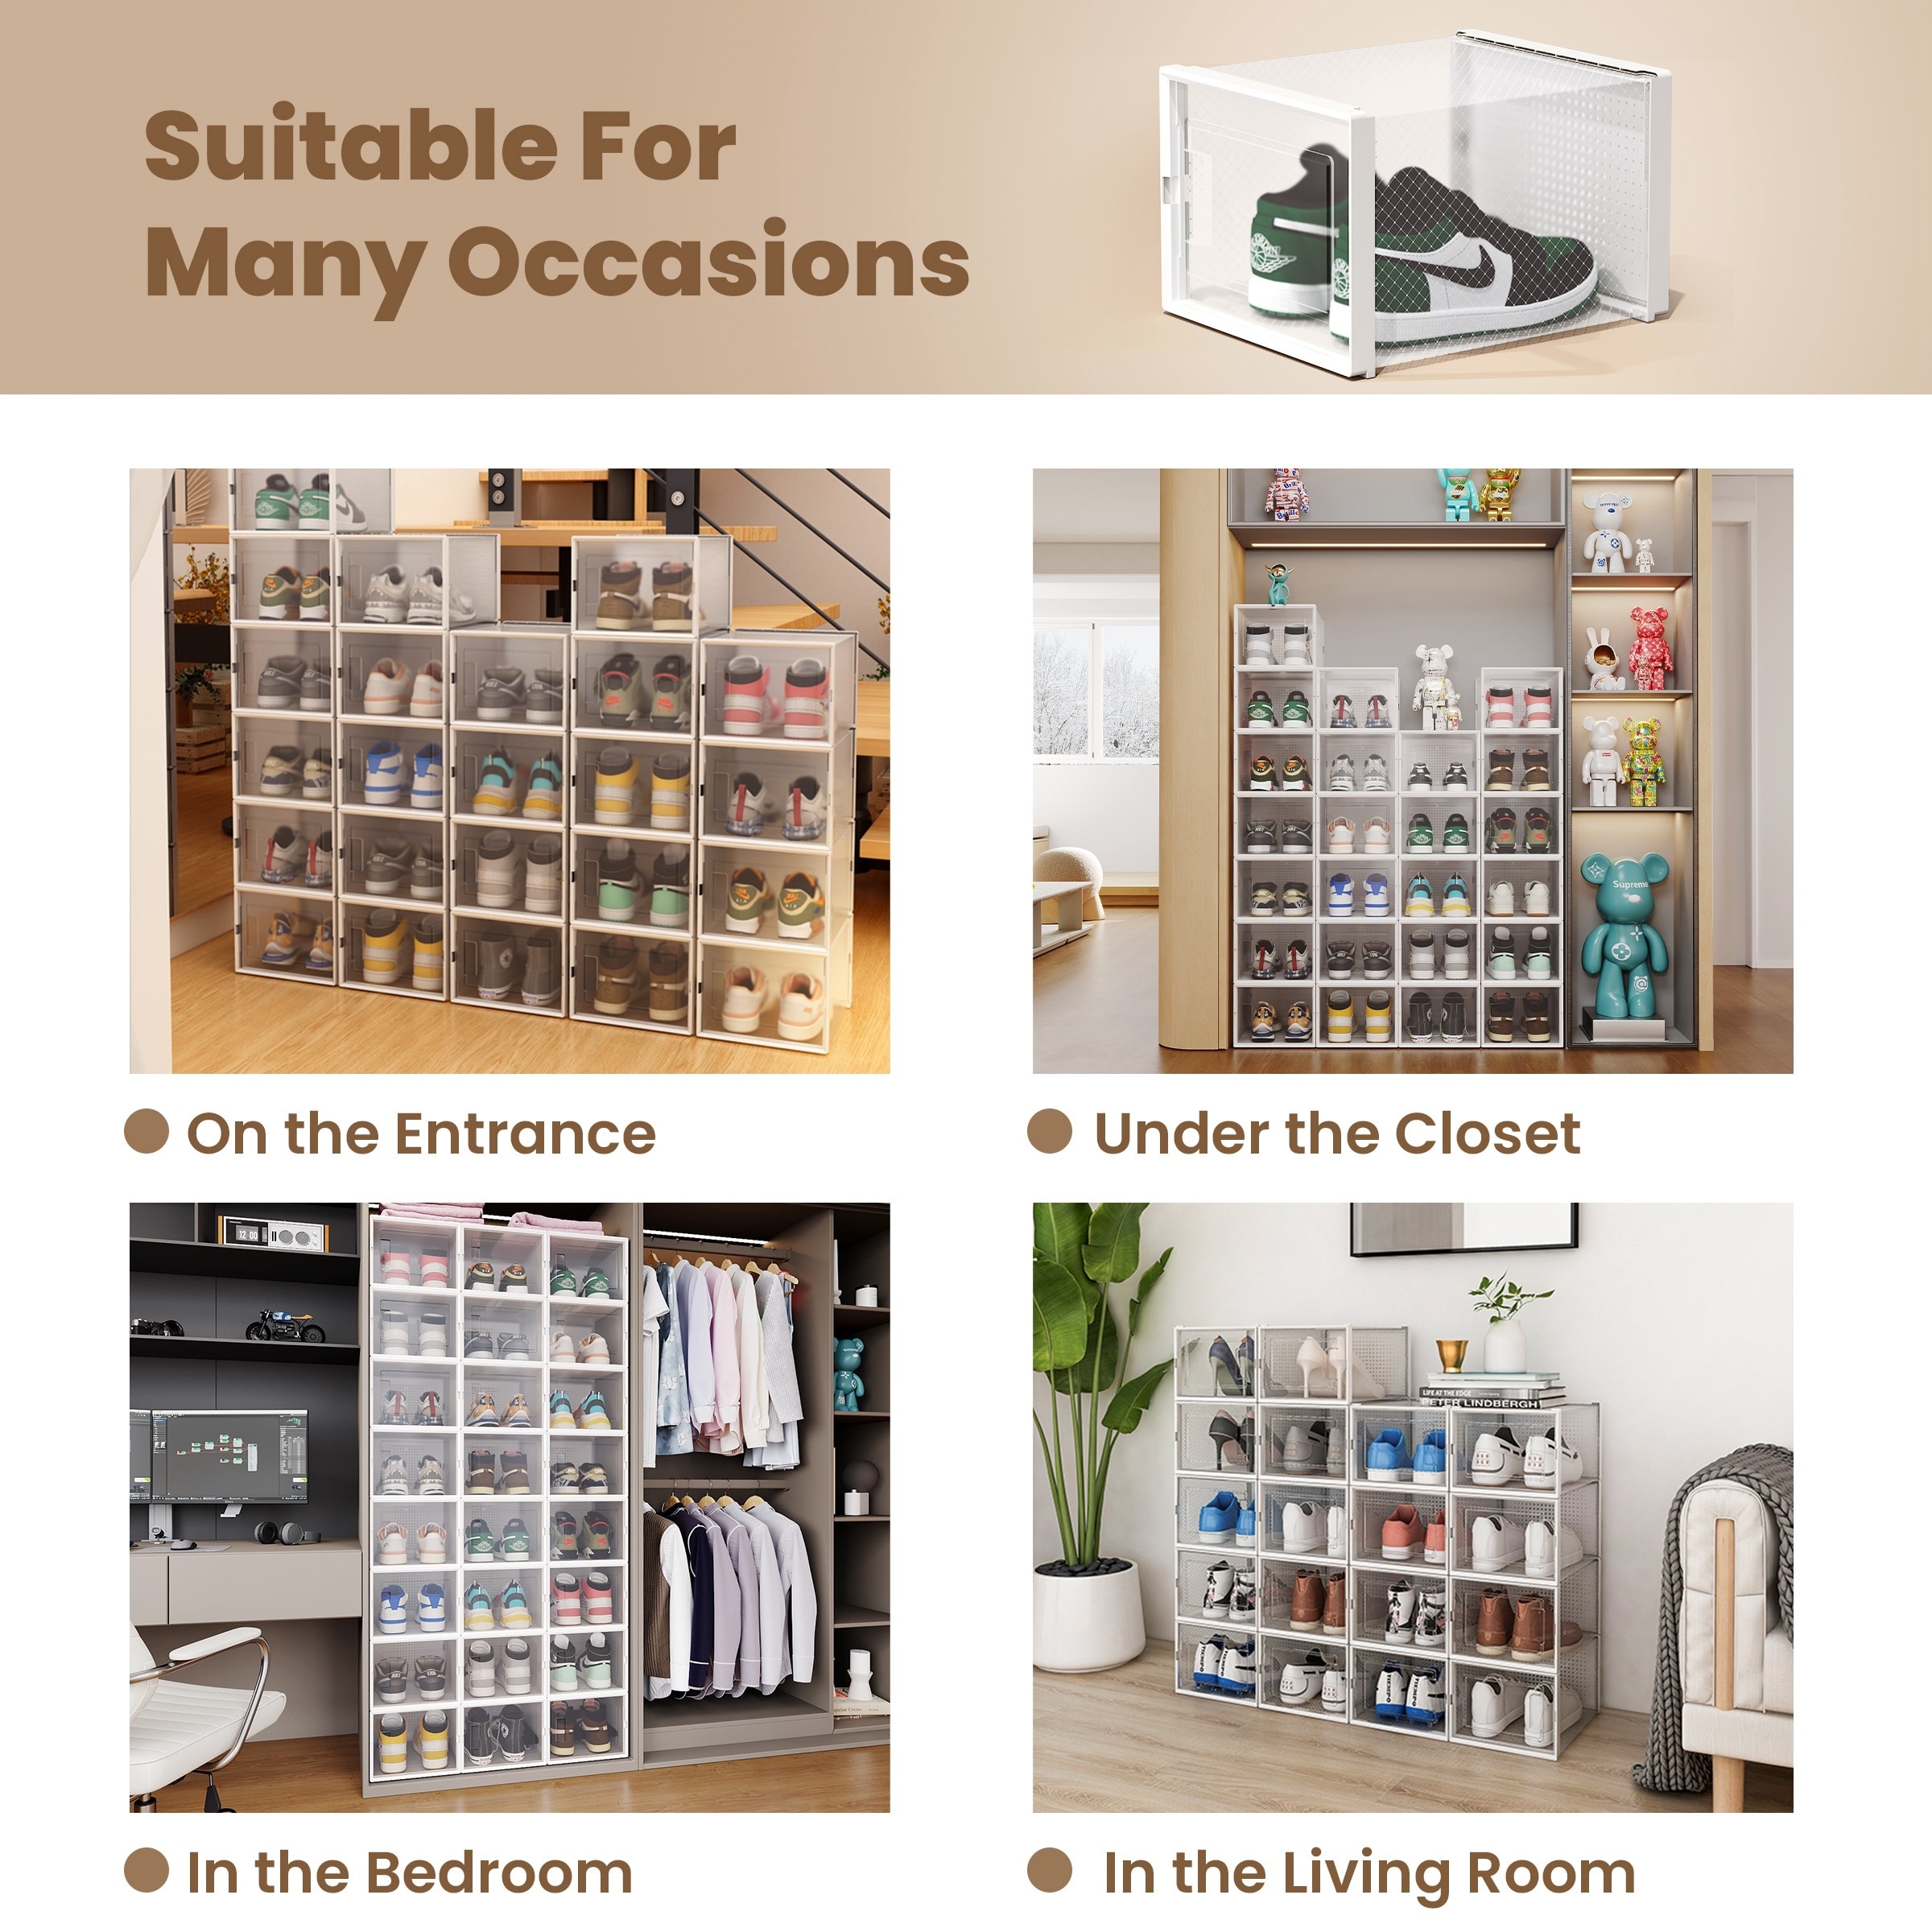 Shoe Box Set Foldable Plastic Storage Transparent Shelf Stack